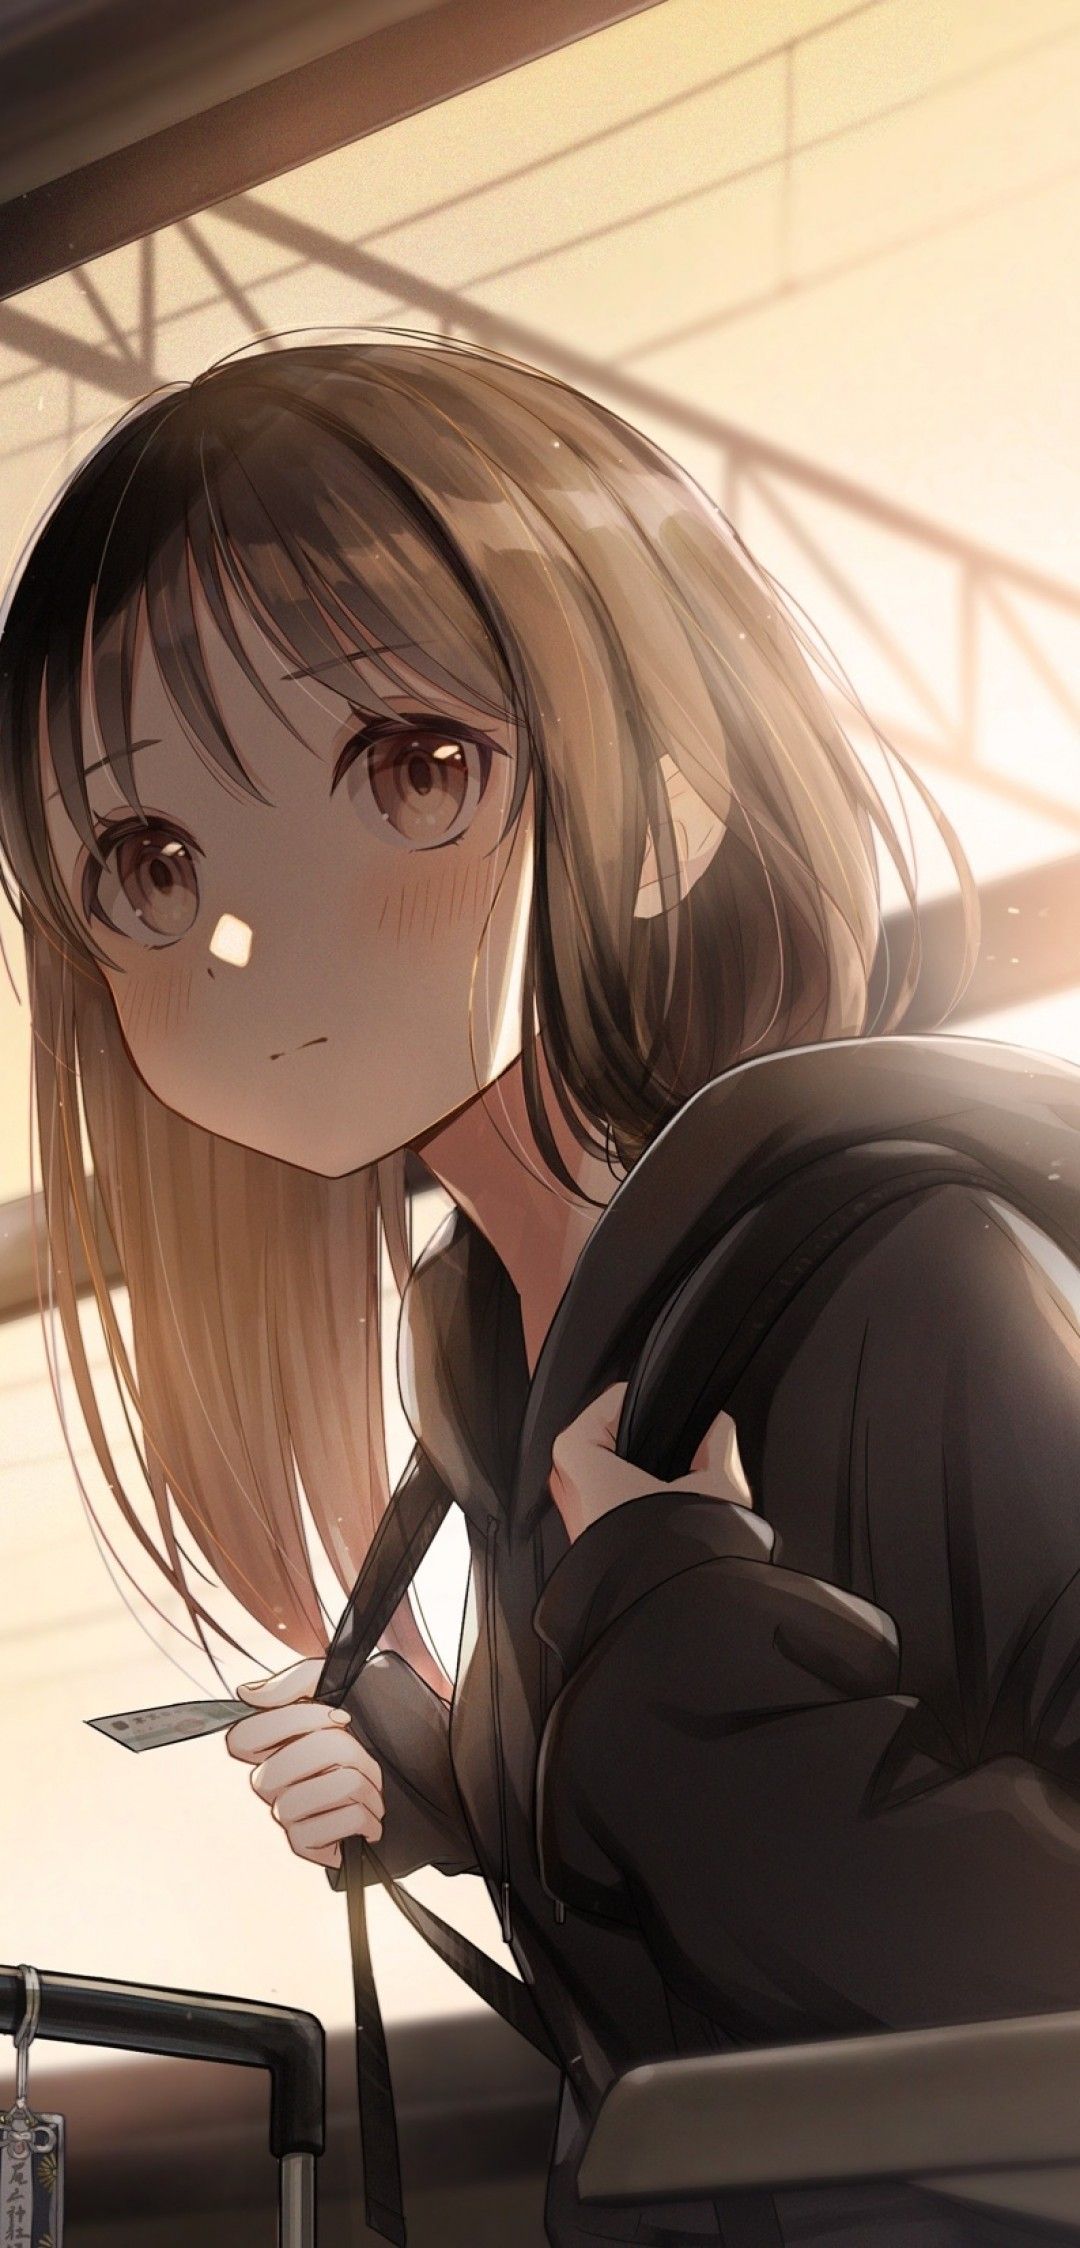 Download 1080x2248 Cute Anime Girl, Hoodie, Short Hair, Train, Brown Hair Wallpaper for Xiaomi Mi 8 Pro